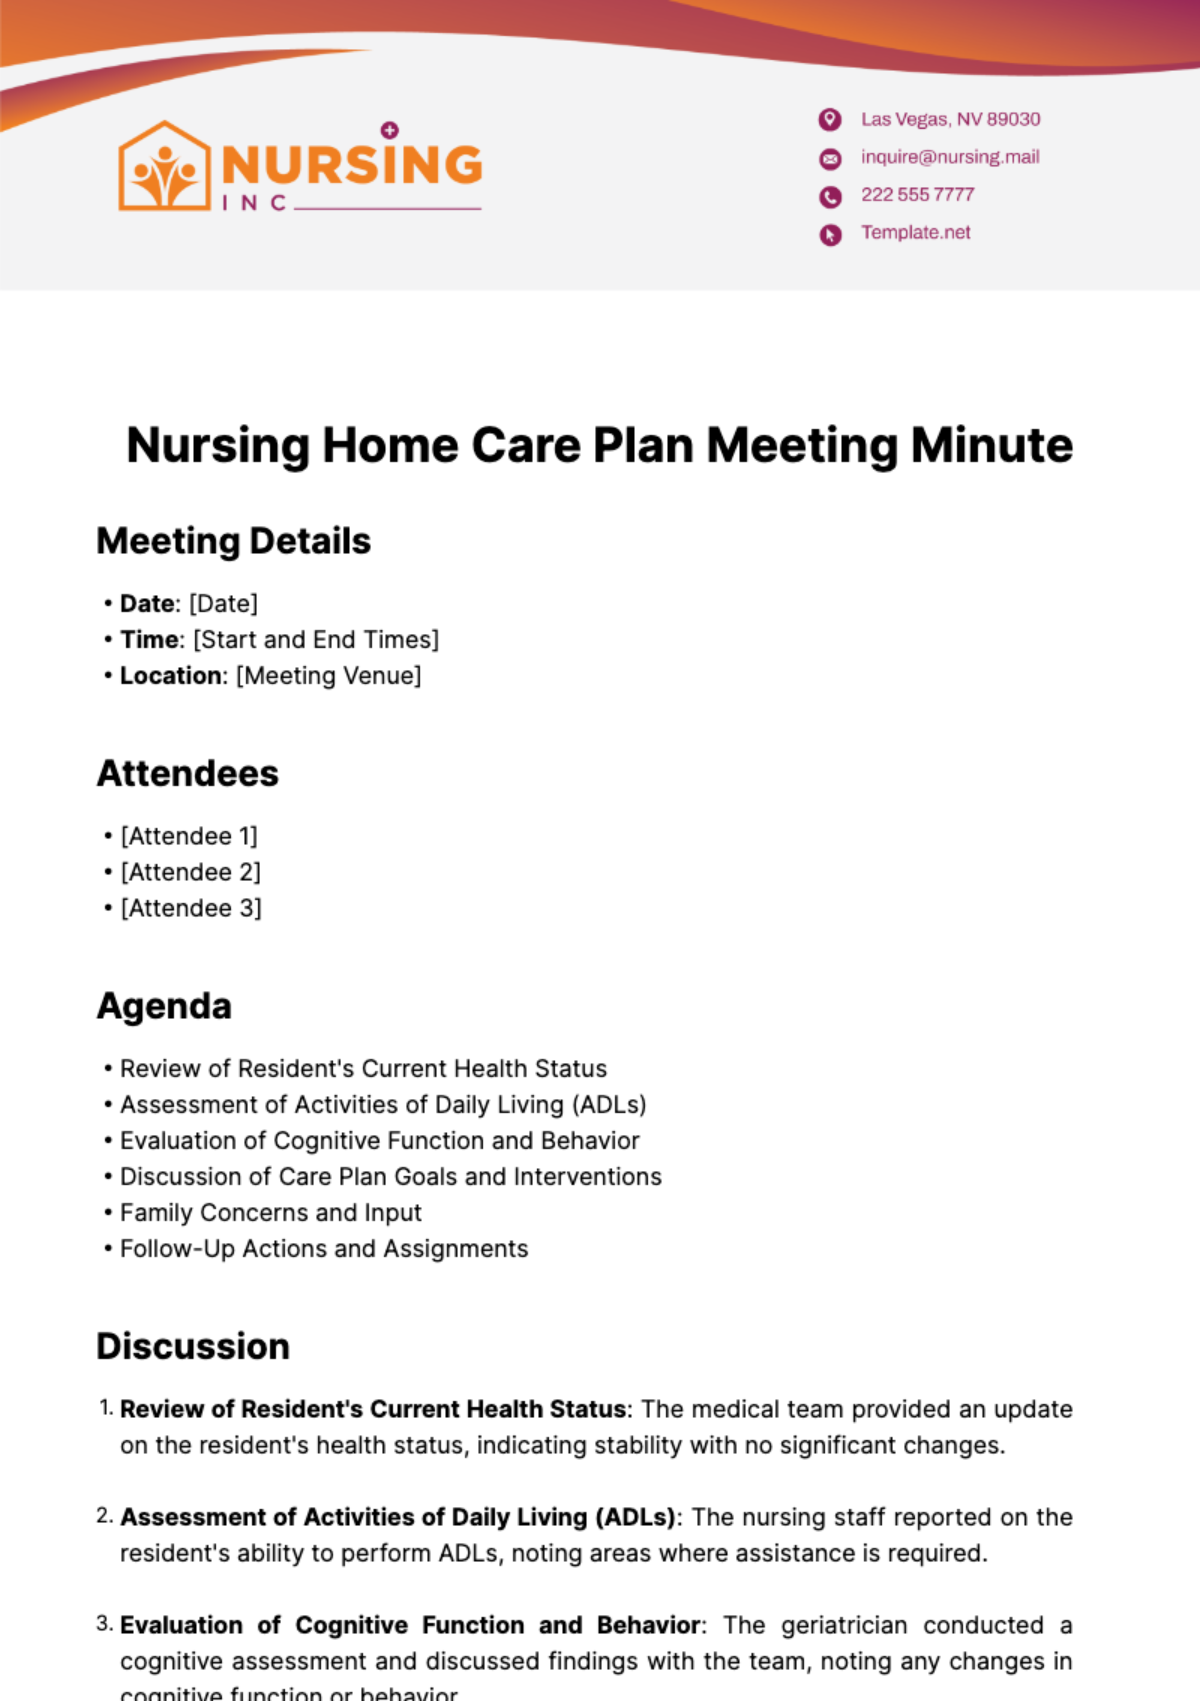 Nursing Home Care Plan Meeting Minute Template